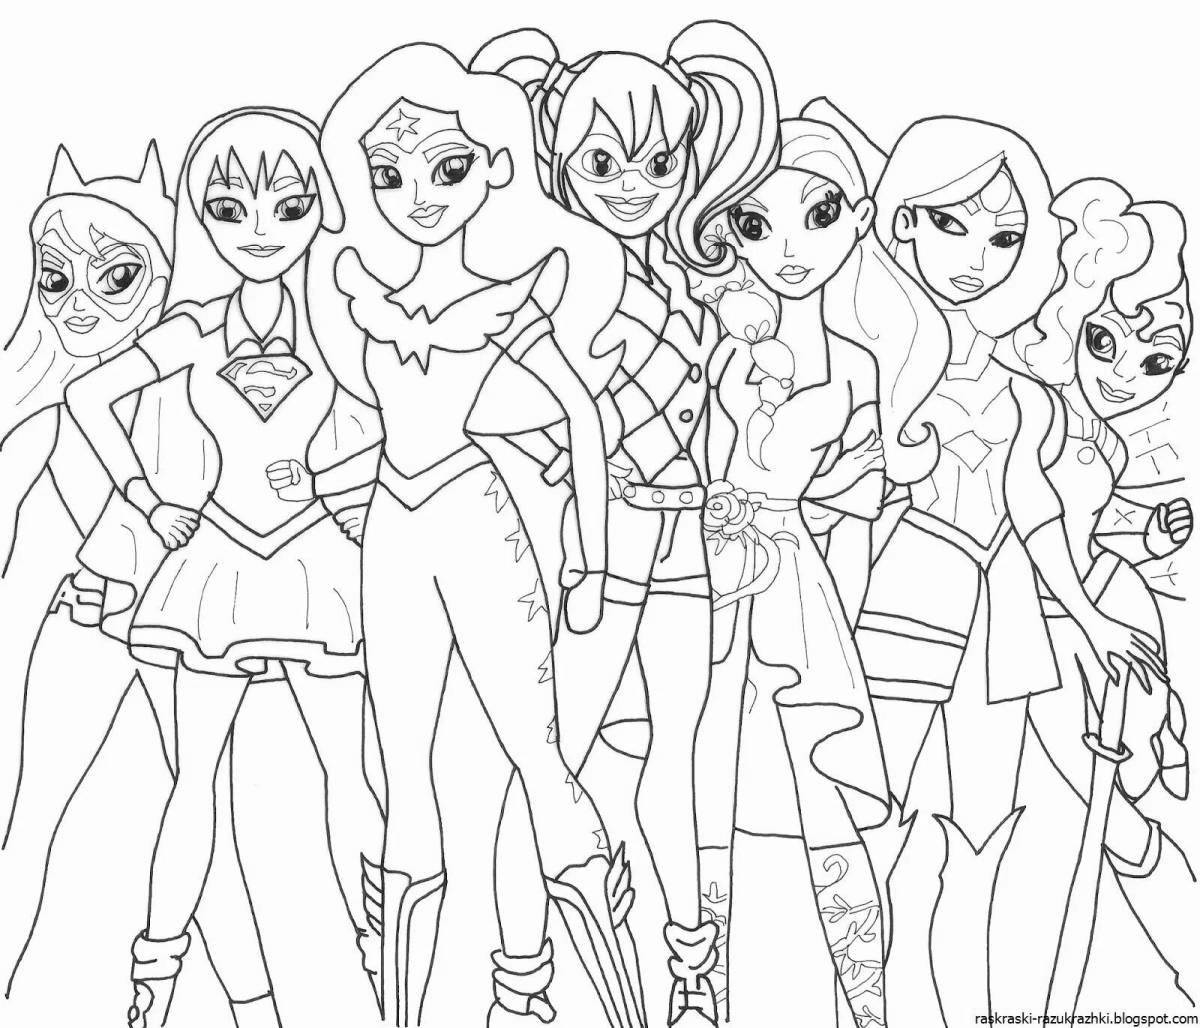 Coloring page energetic superhero girls